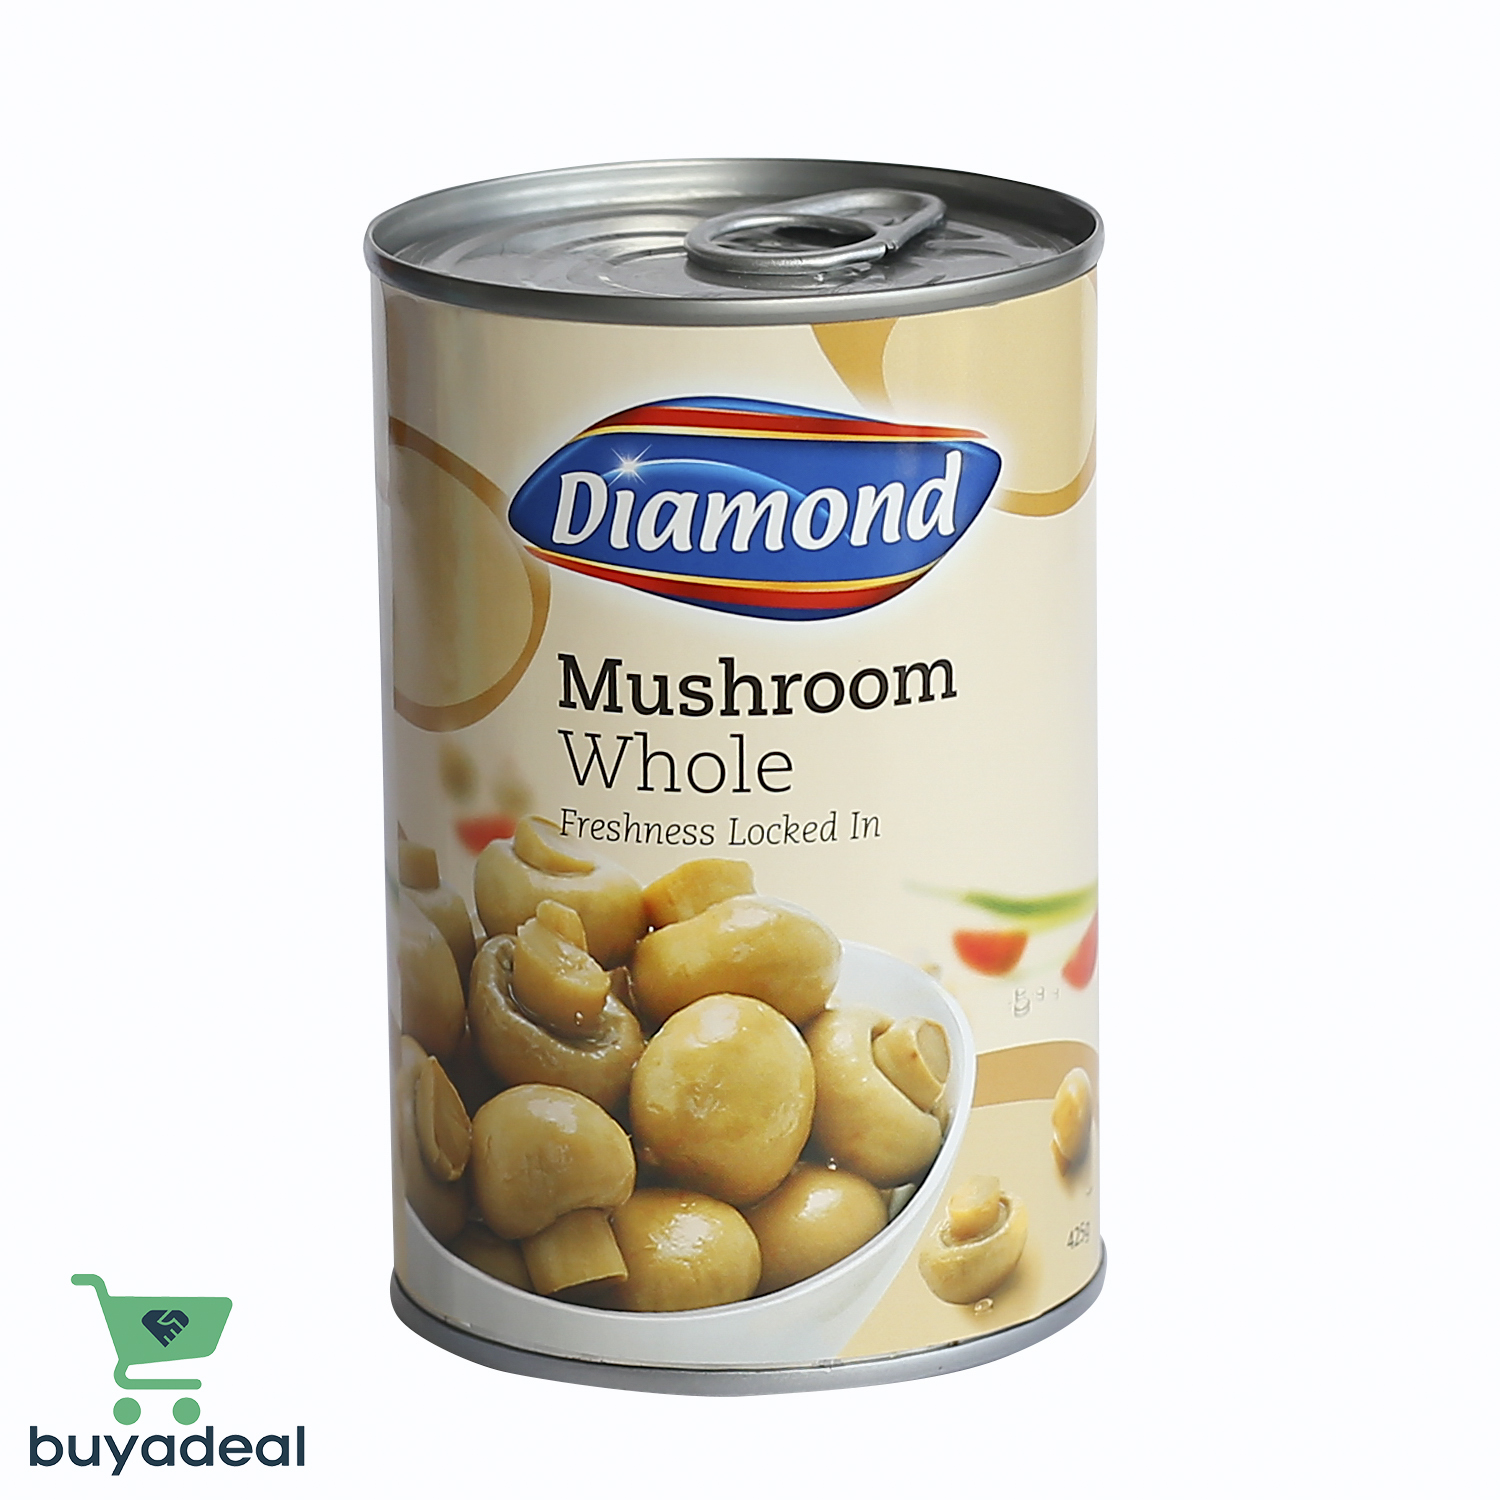 Buyadeal Product Diamond Mushroom whole 425G